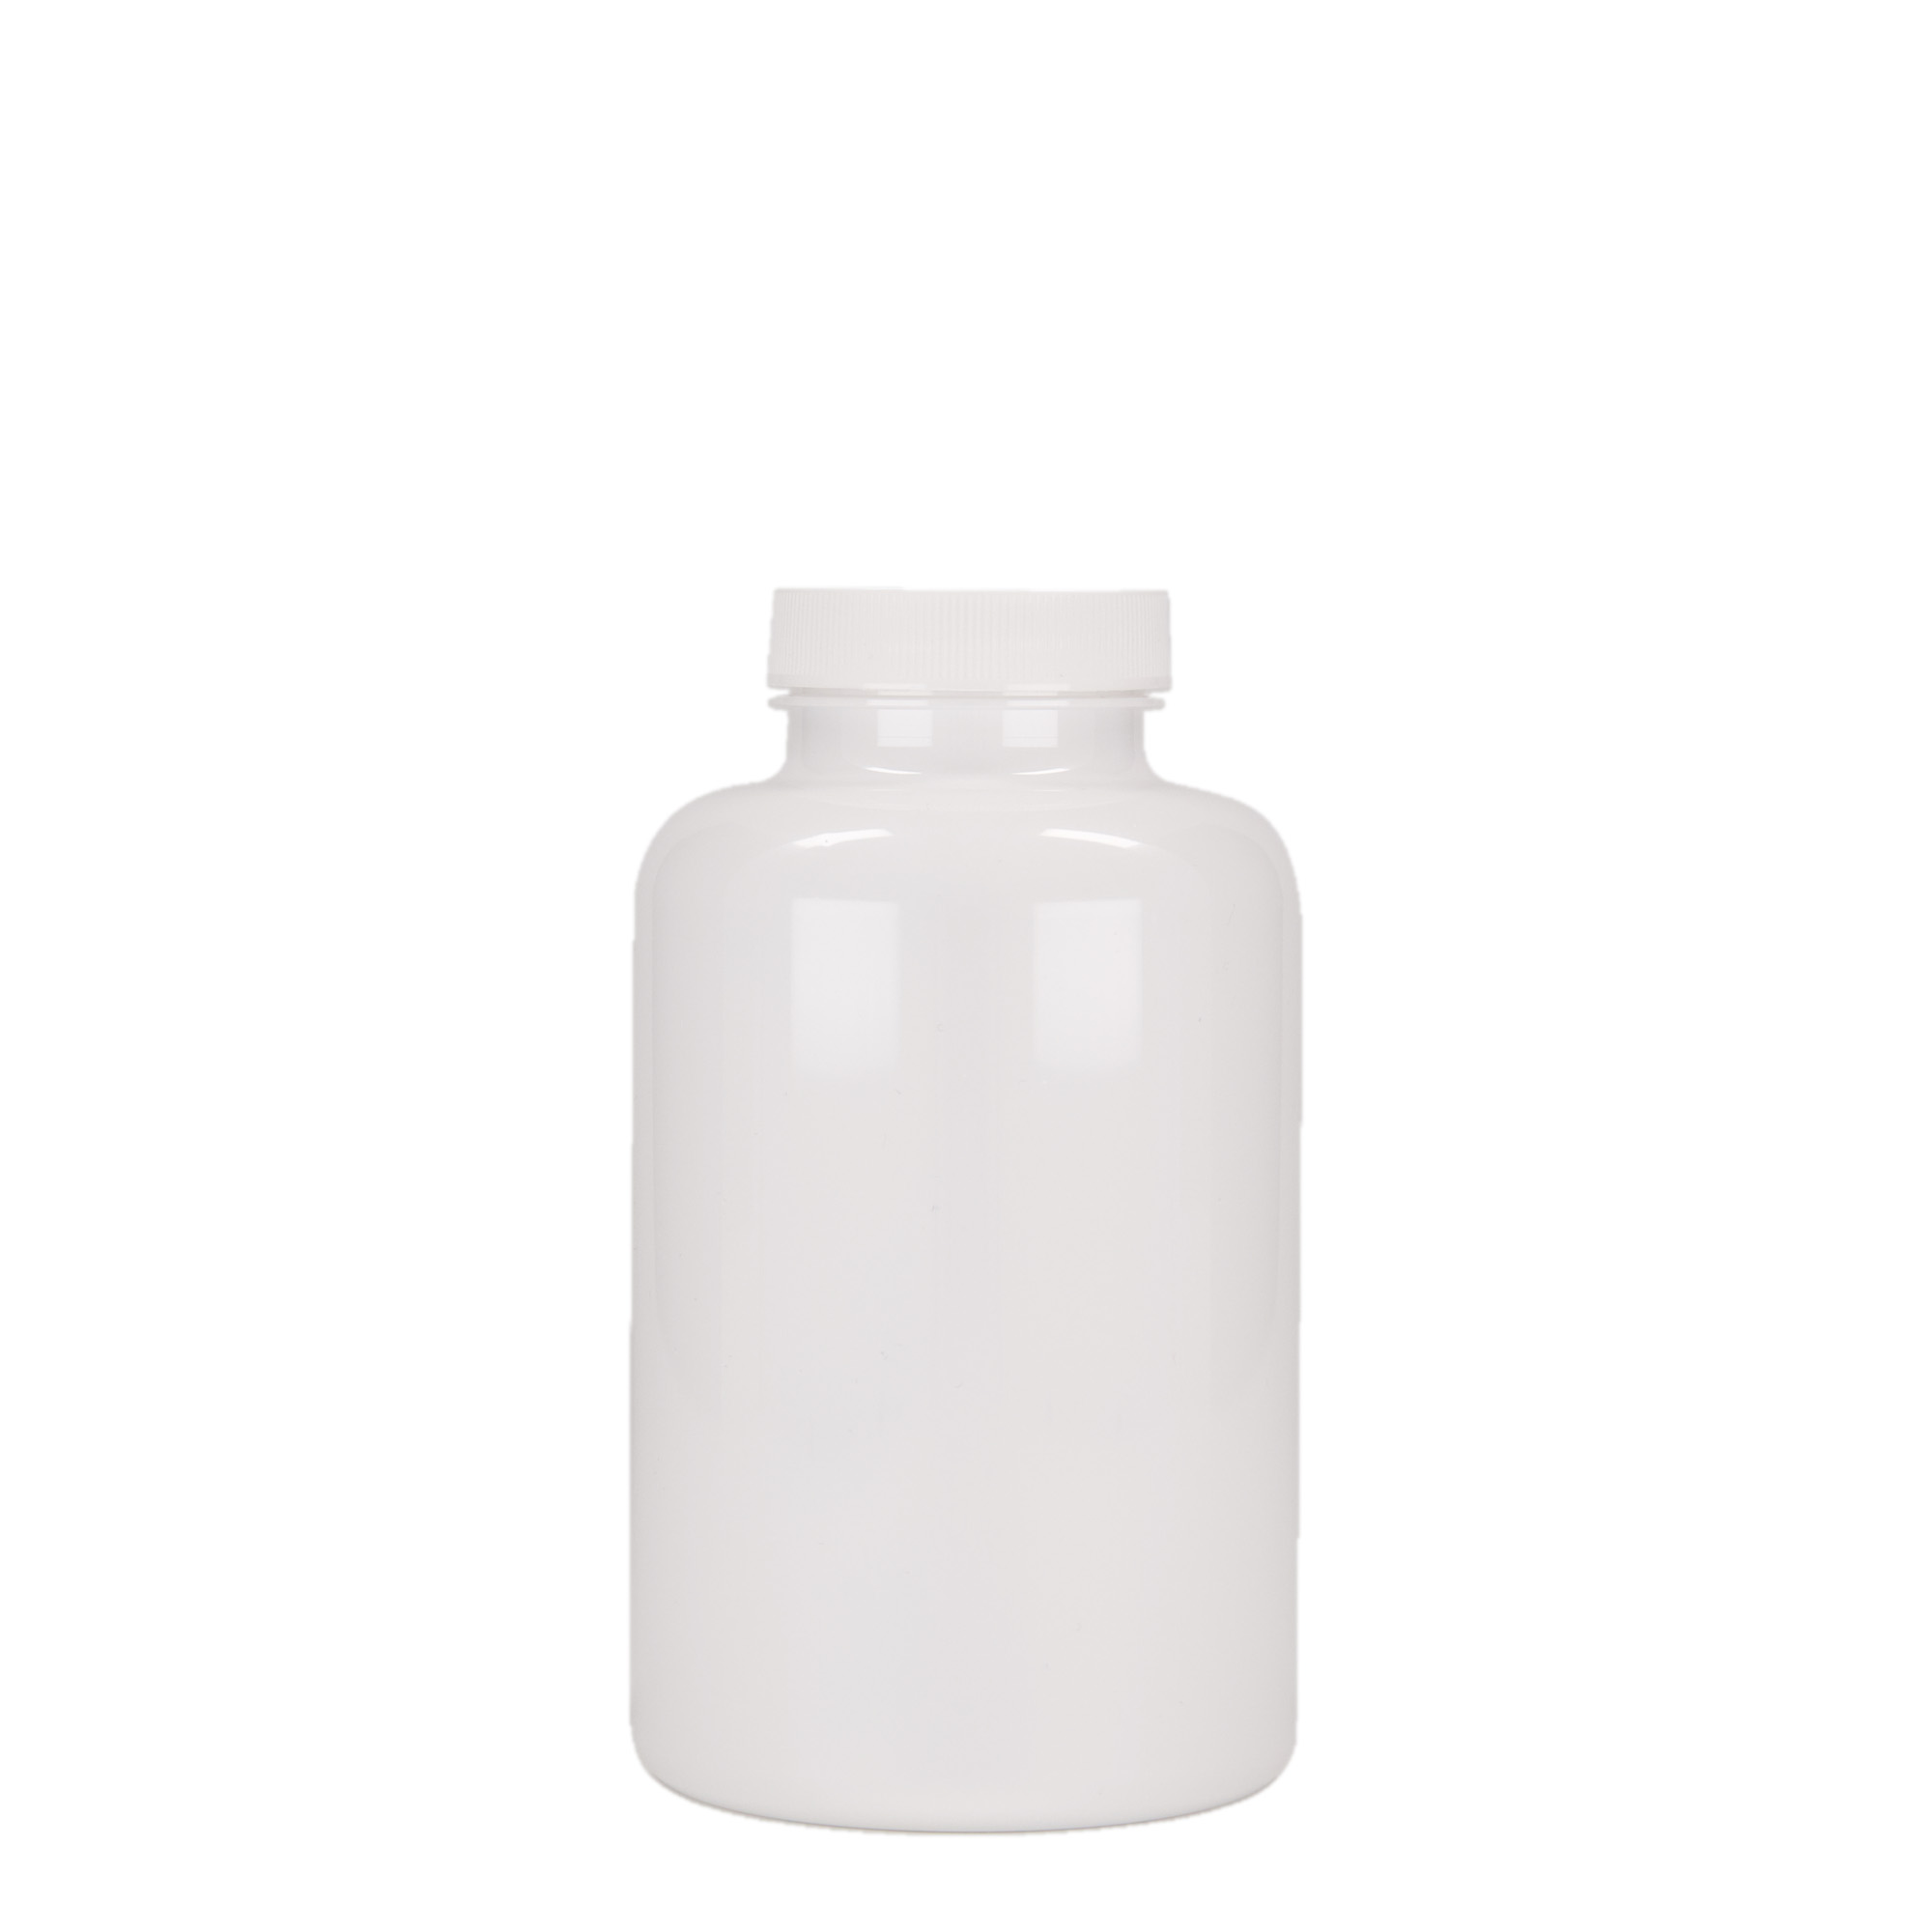 Packer en PET 500 ml, plastique, blanc, bouchage: GPI 45/400